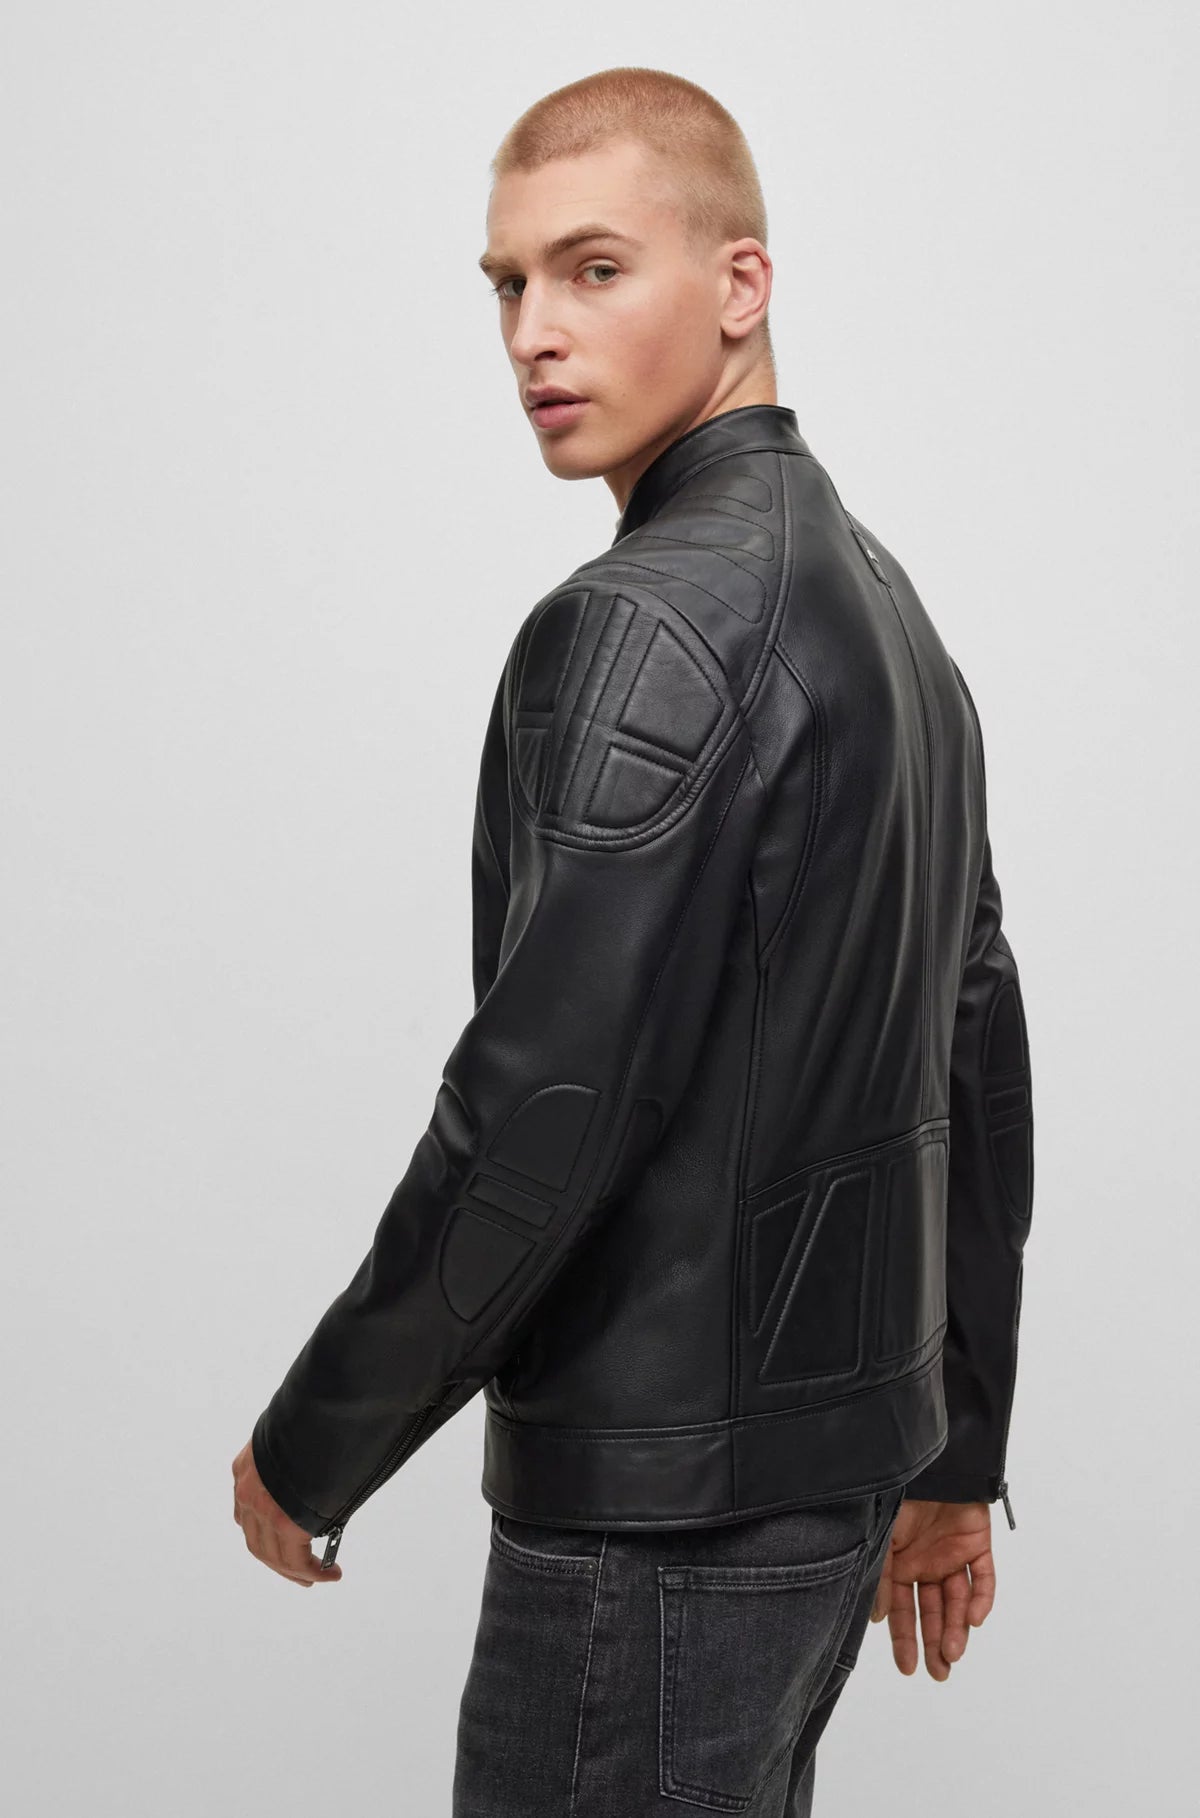 BOSS Leather Jacket - Jomarc